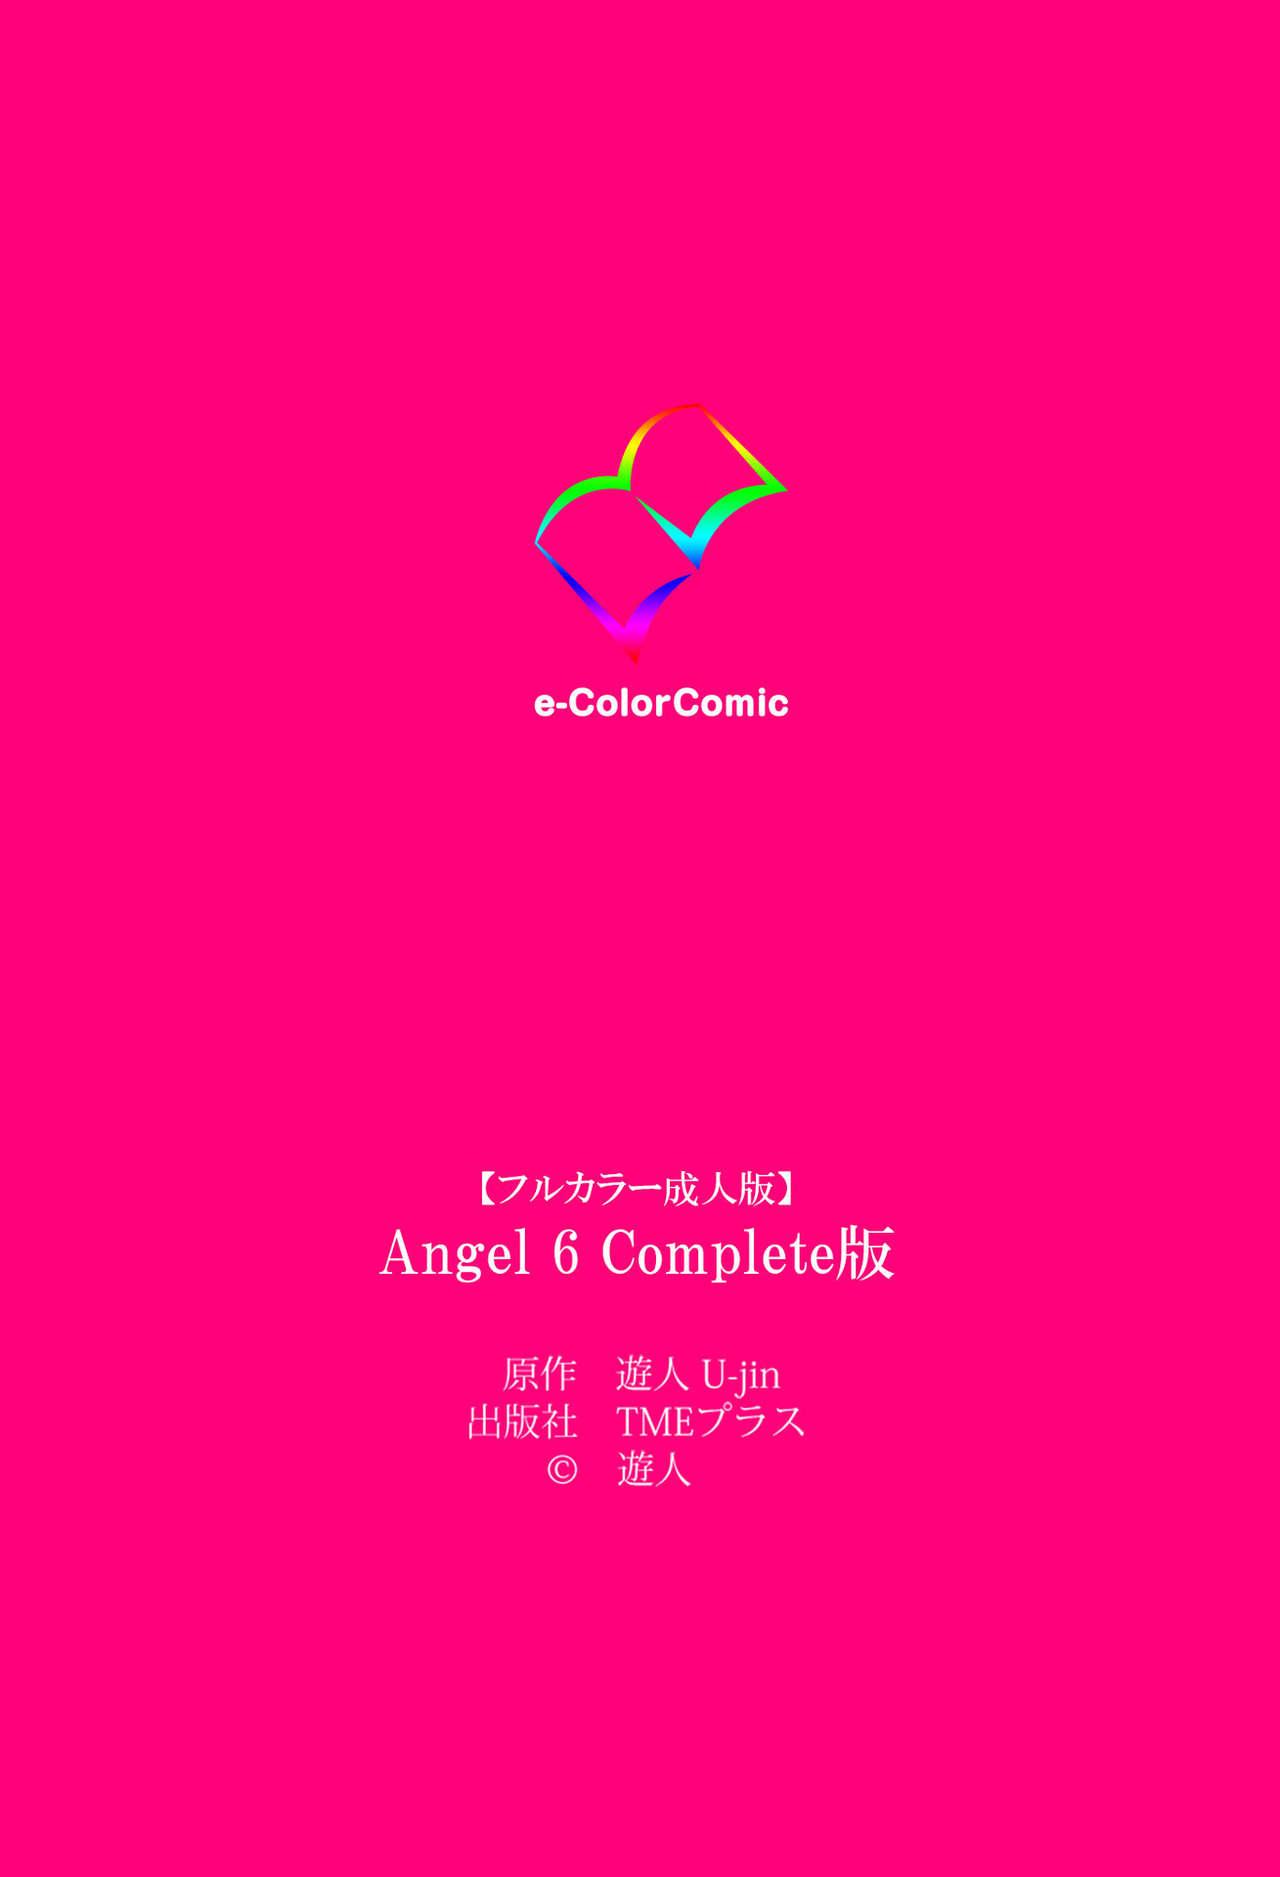 ANGEL 6 Completeban 134